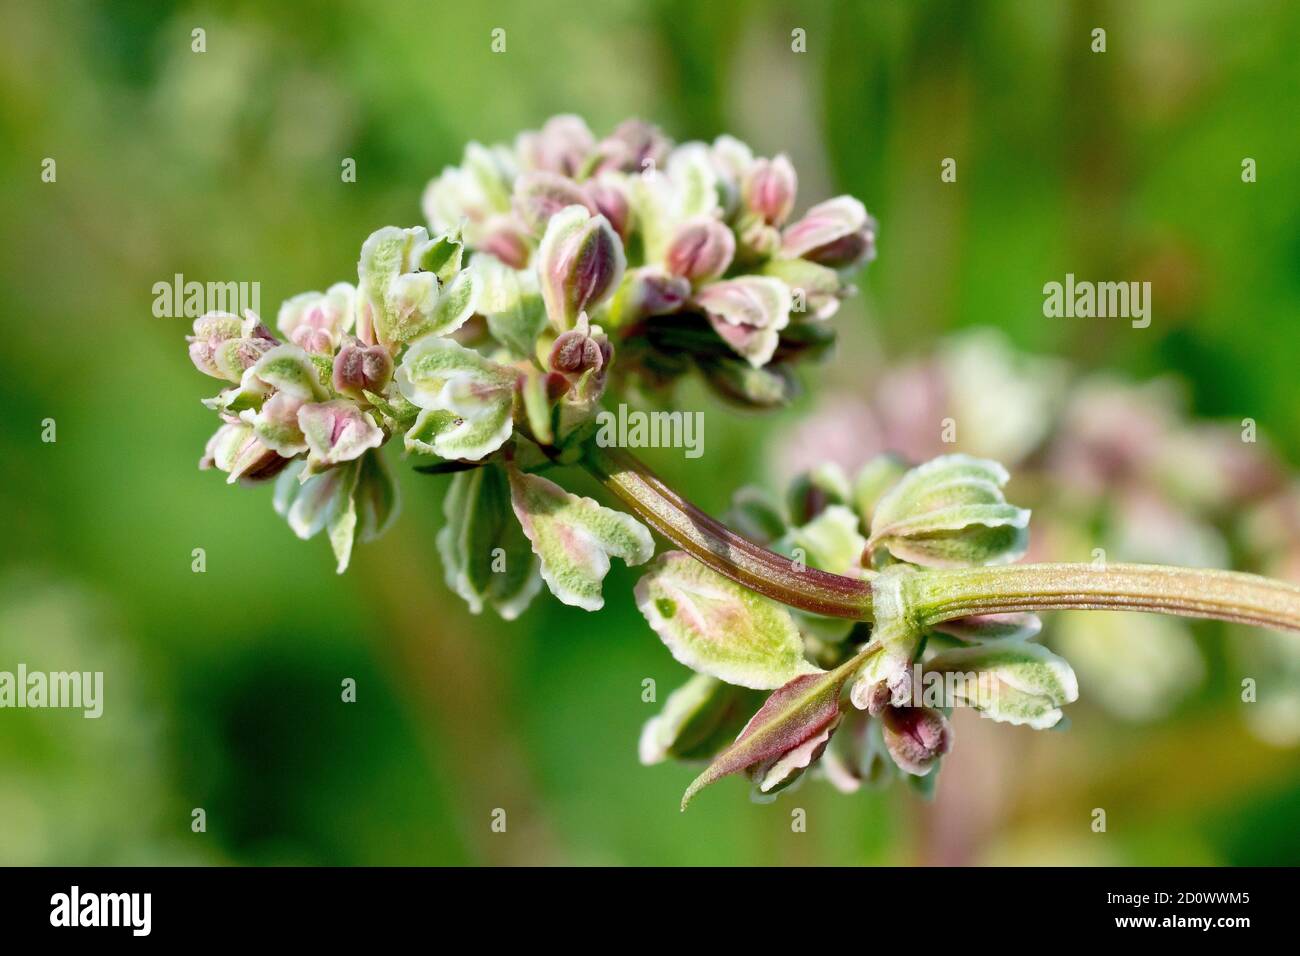 Black Bindweed (bilderdykia convolvulus, polygonum convolvulus or fallopia convolvulus), close up of the unusual looking flowers. Stock Photo